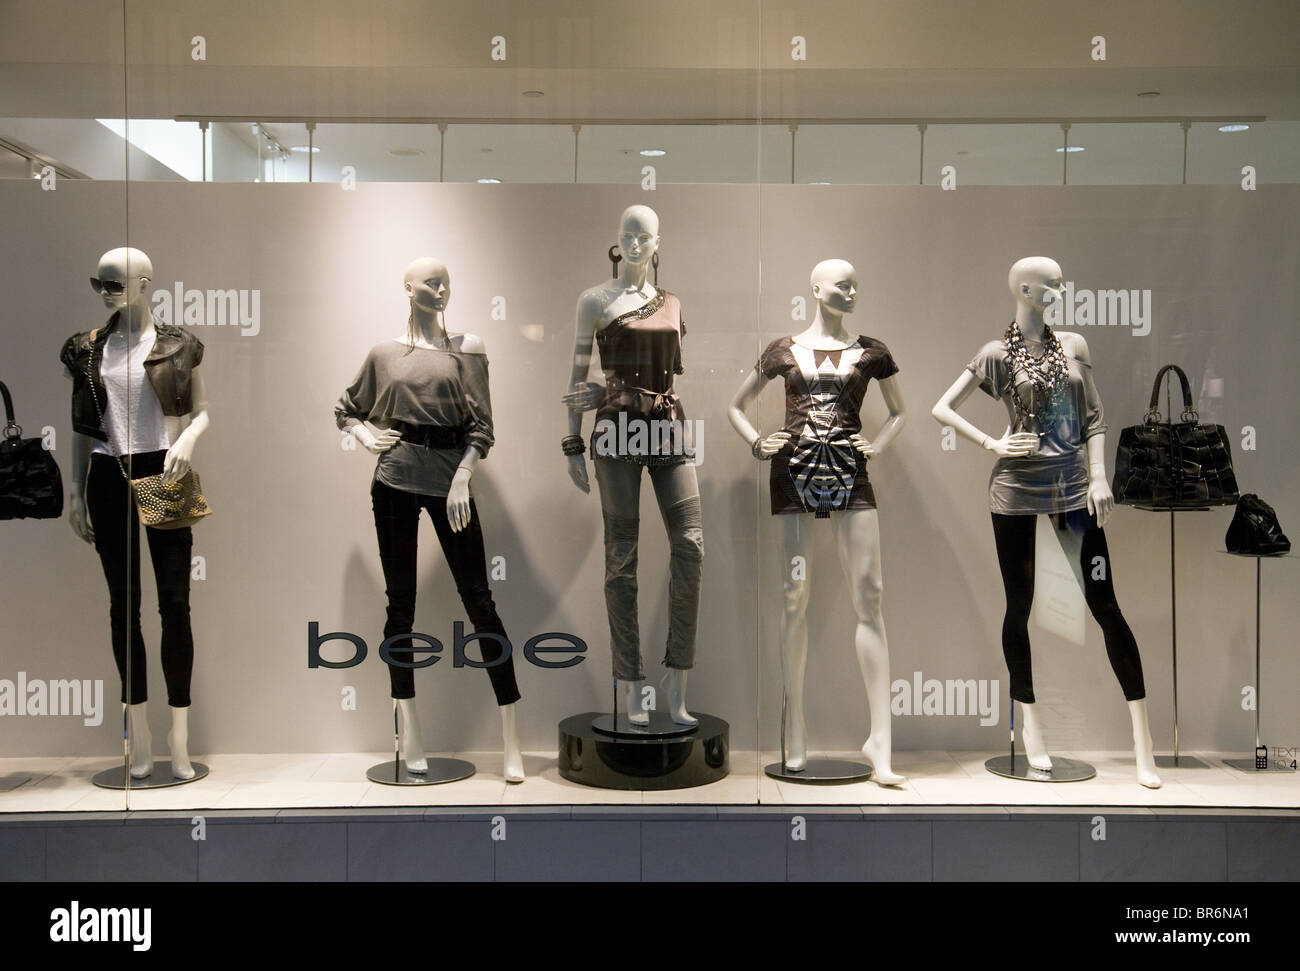 Bebe womens clothes and apparel store window, Las Vegas USA Stock Photo - Alamy